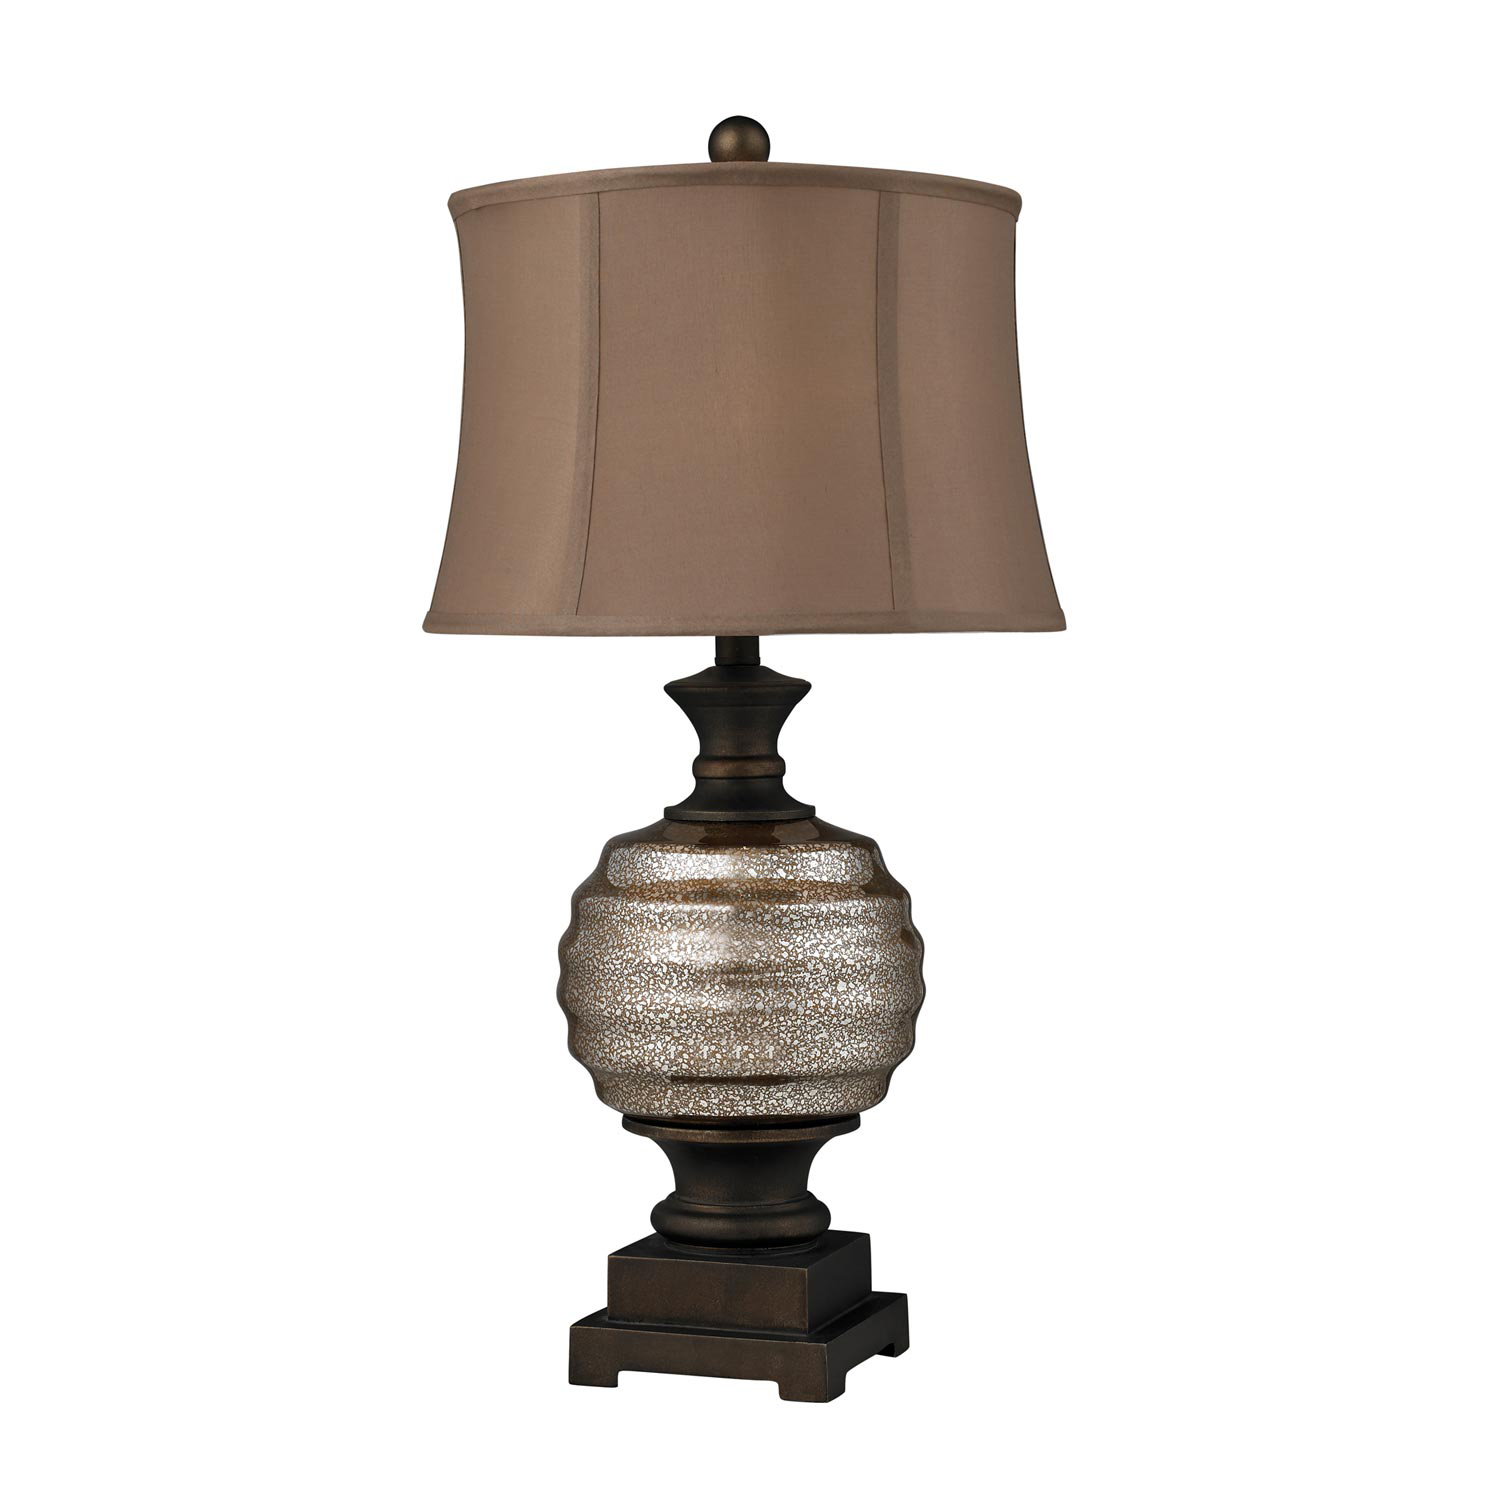 Elk Lighting D2308 Grants Pass Table Lamp - Antique Mercury Glass and Bronze Accents